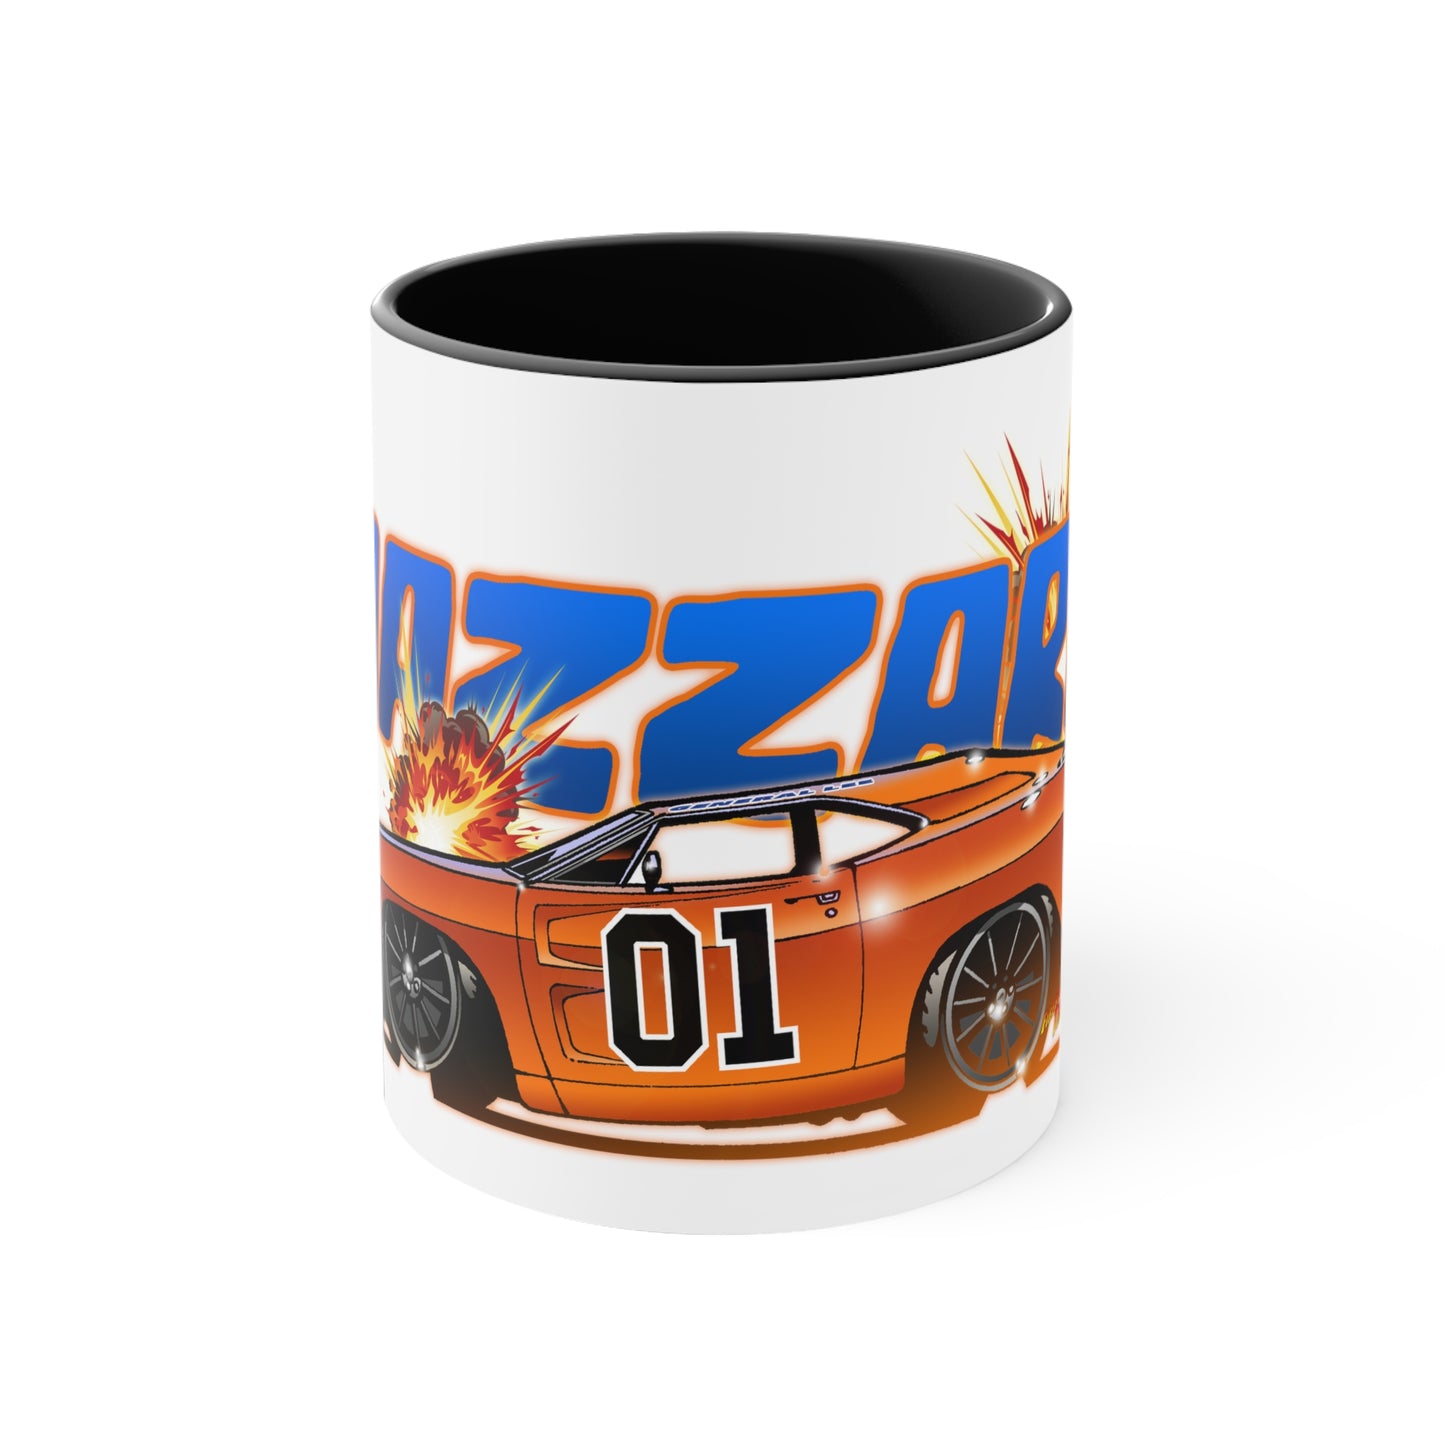 GENERAL LEE Dukes of Hazzard Movie Car Coffee Mug 11oz